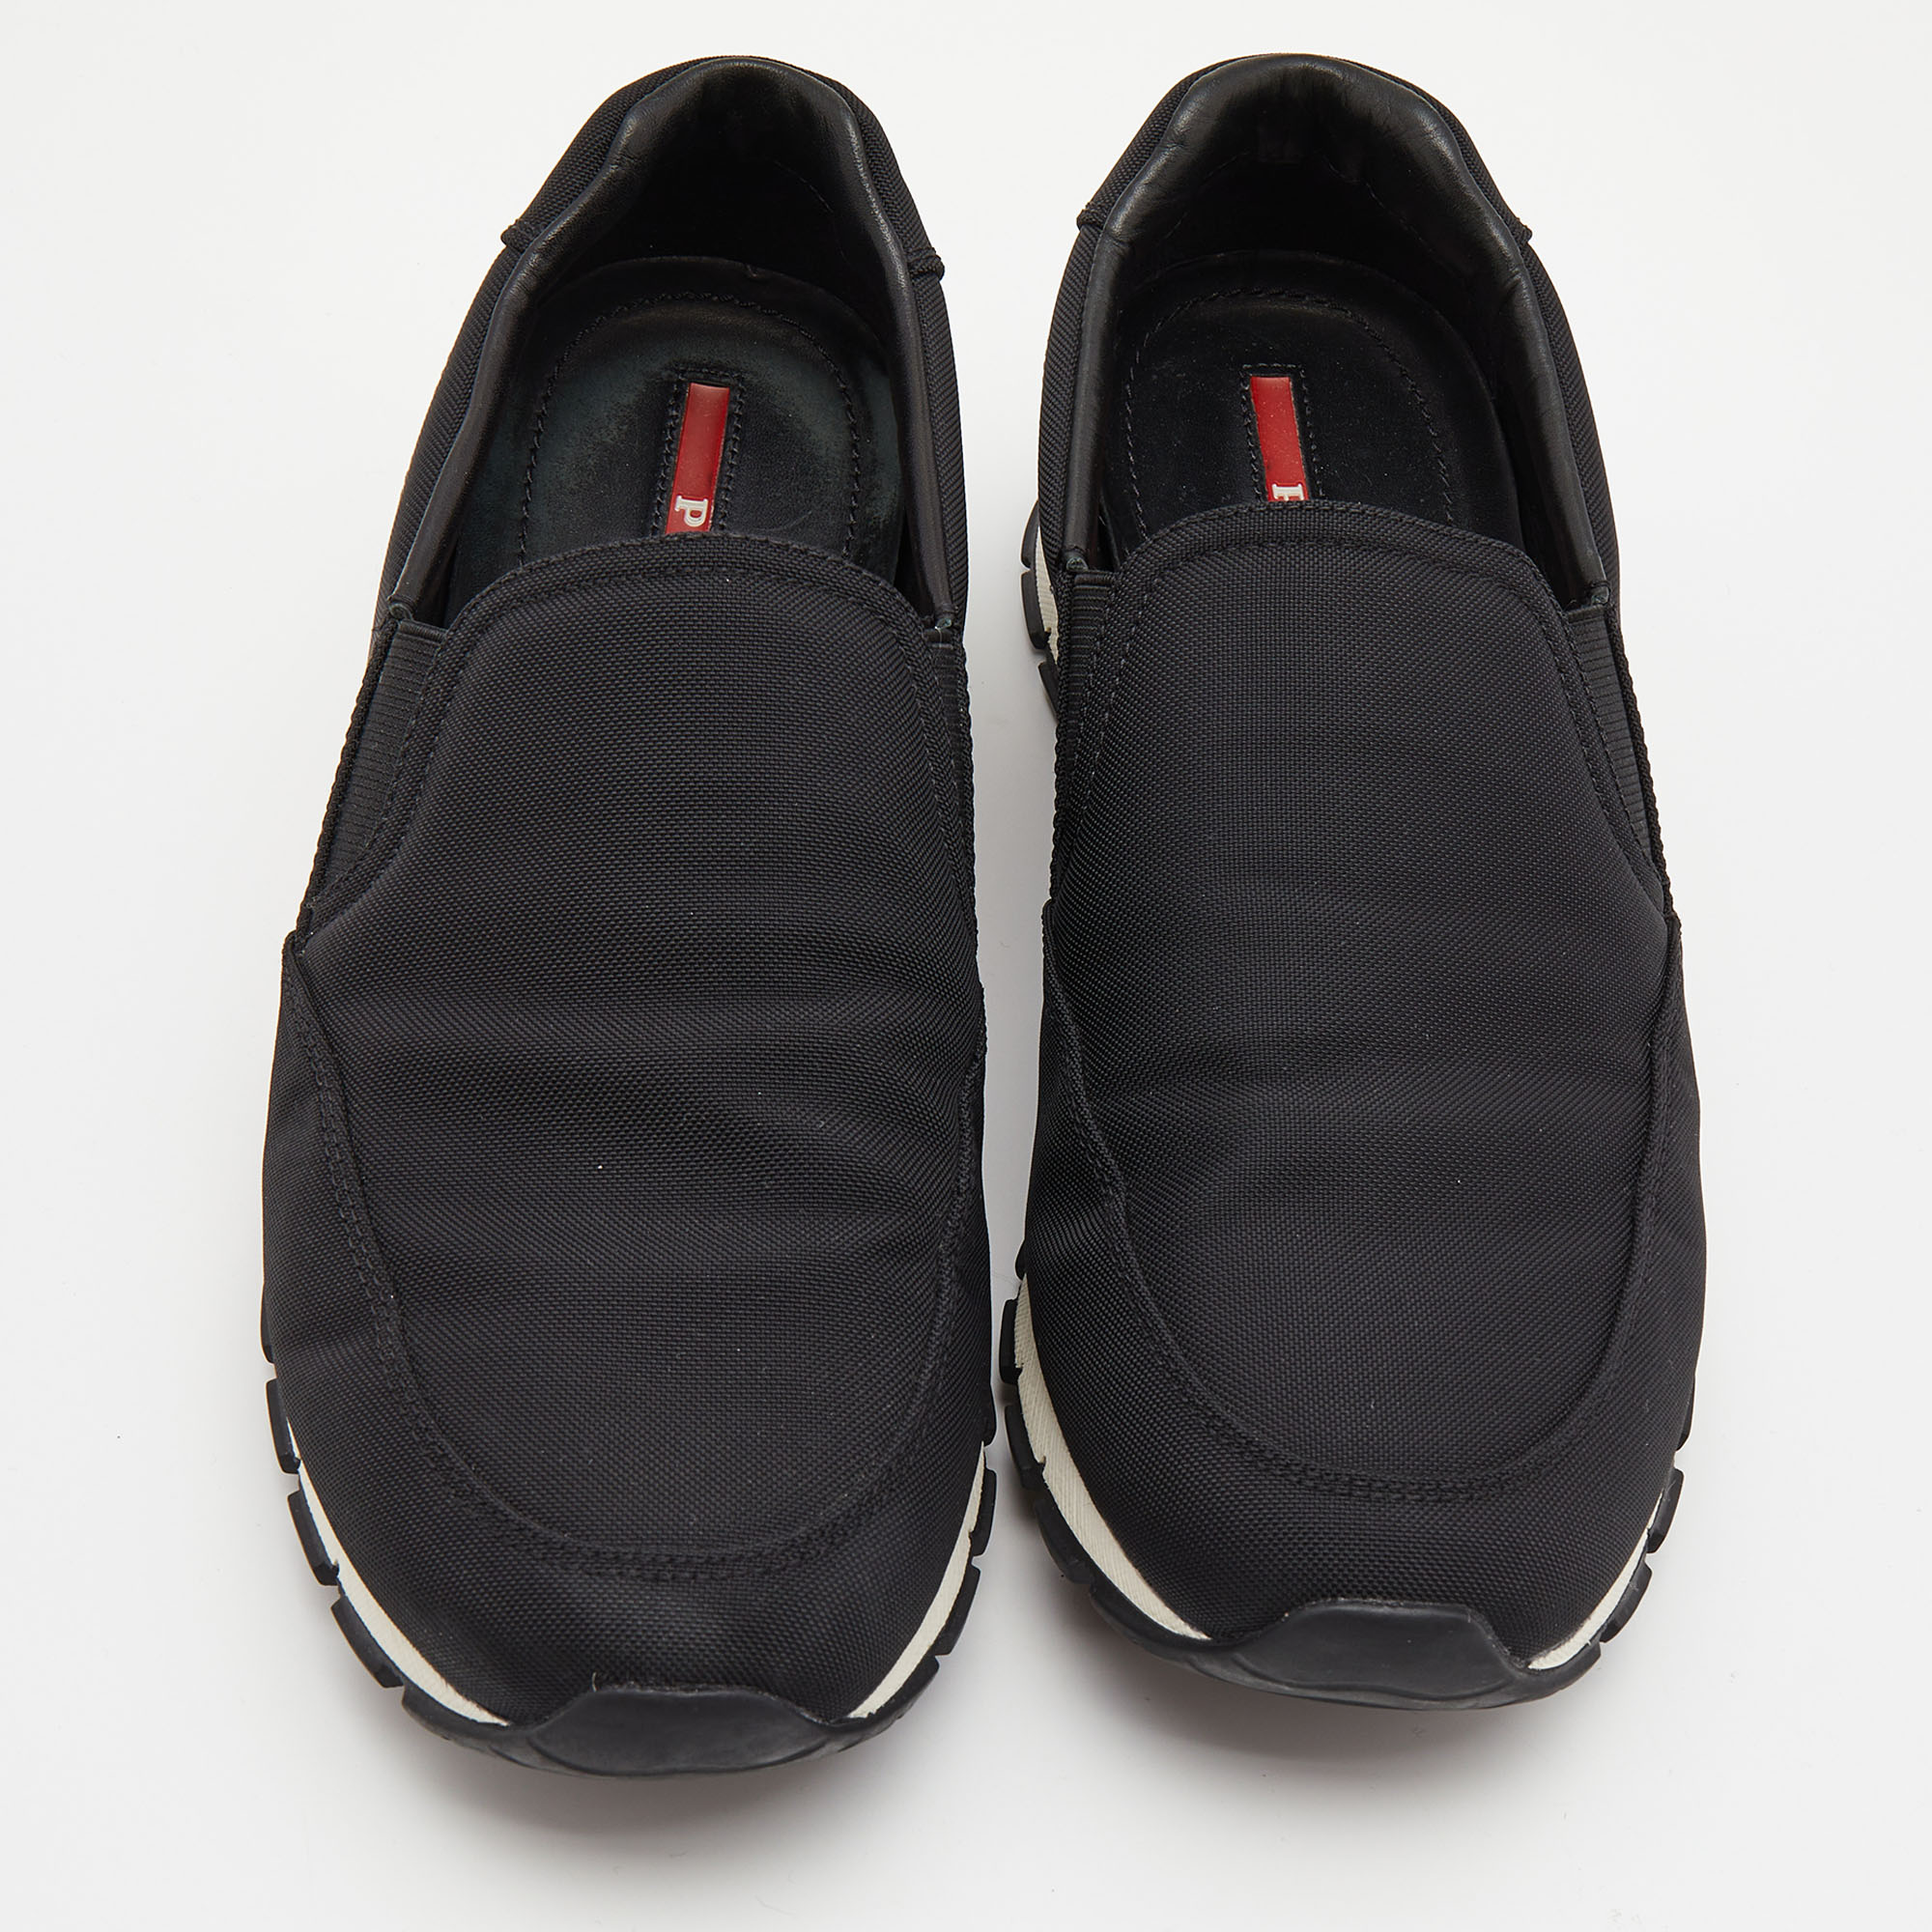 Prada Sport Black Canvas Slip On Sneakers Size 41.5